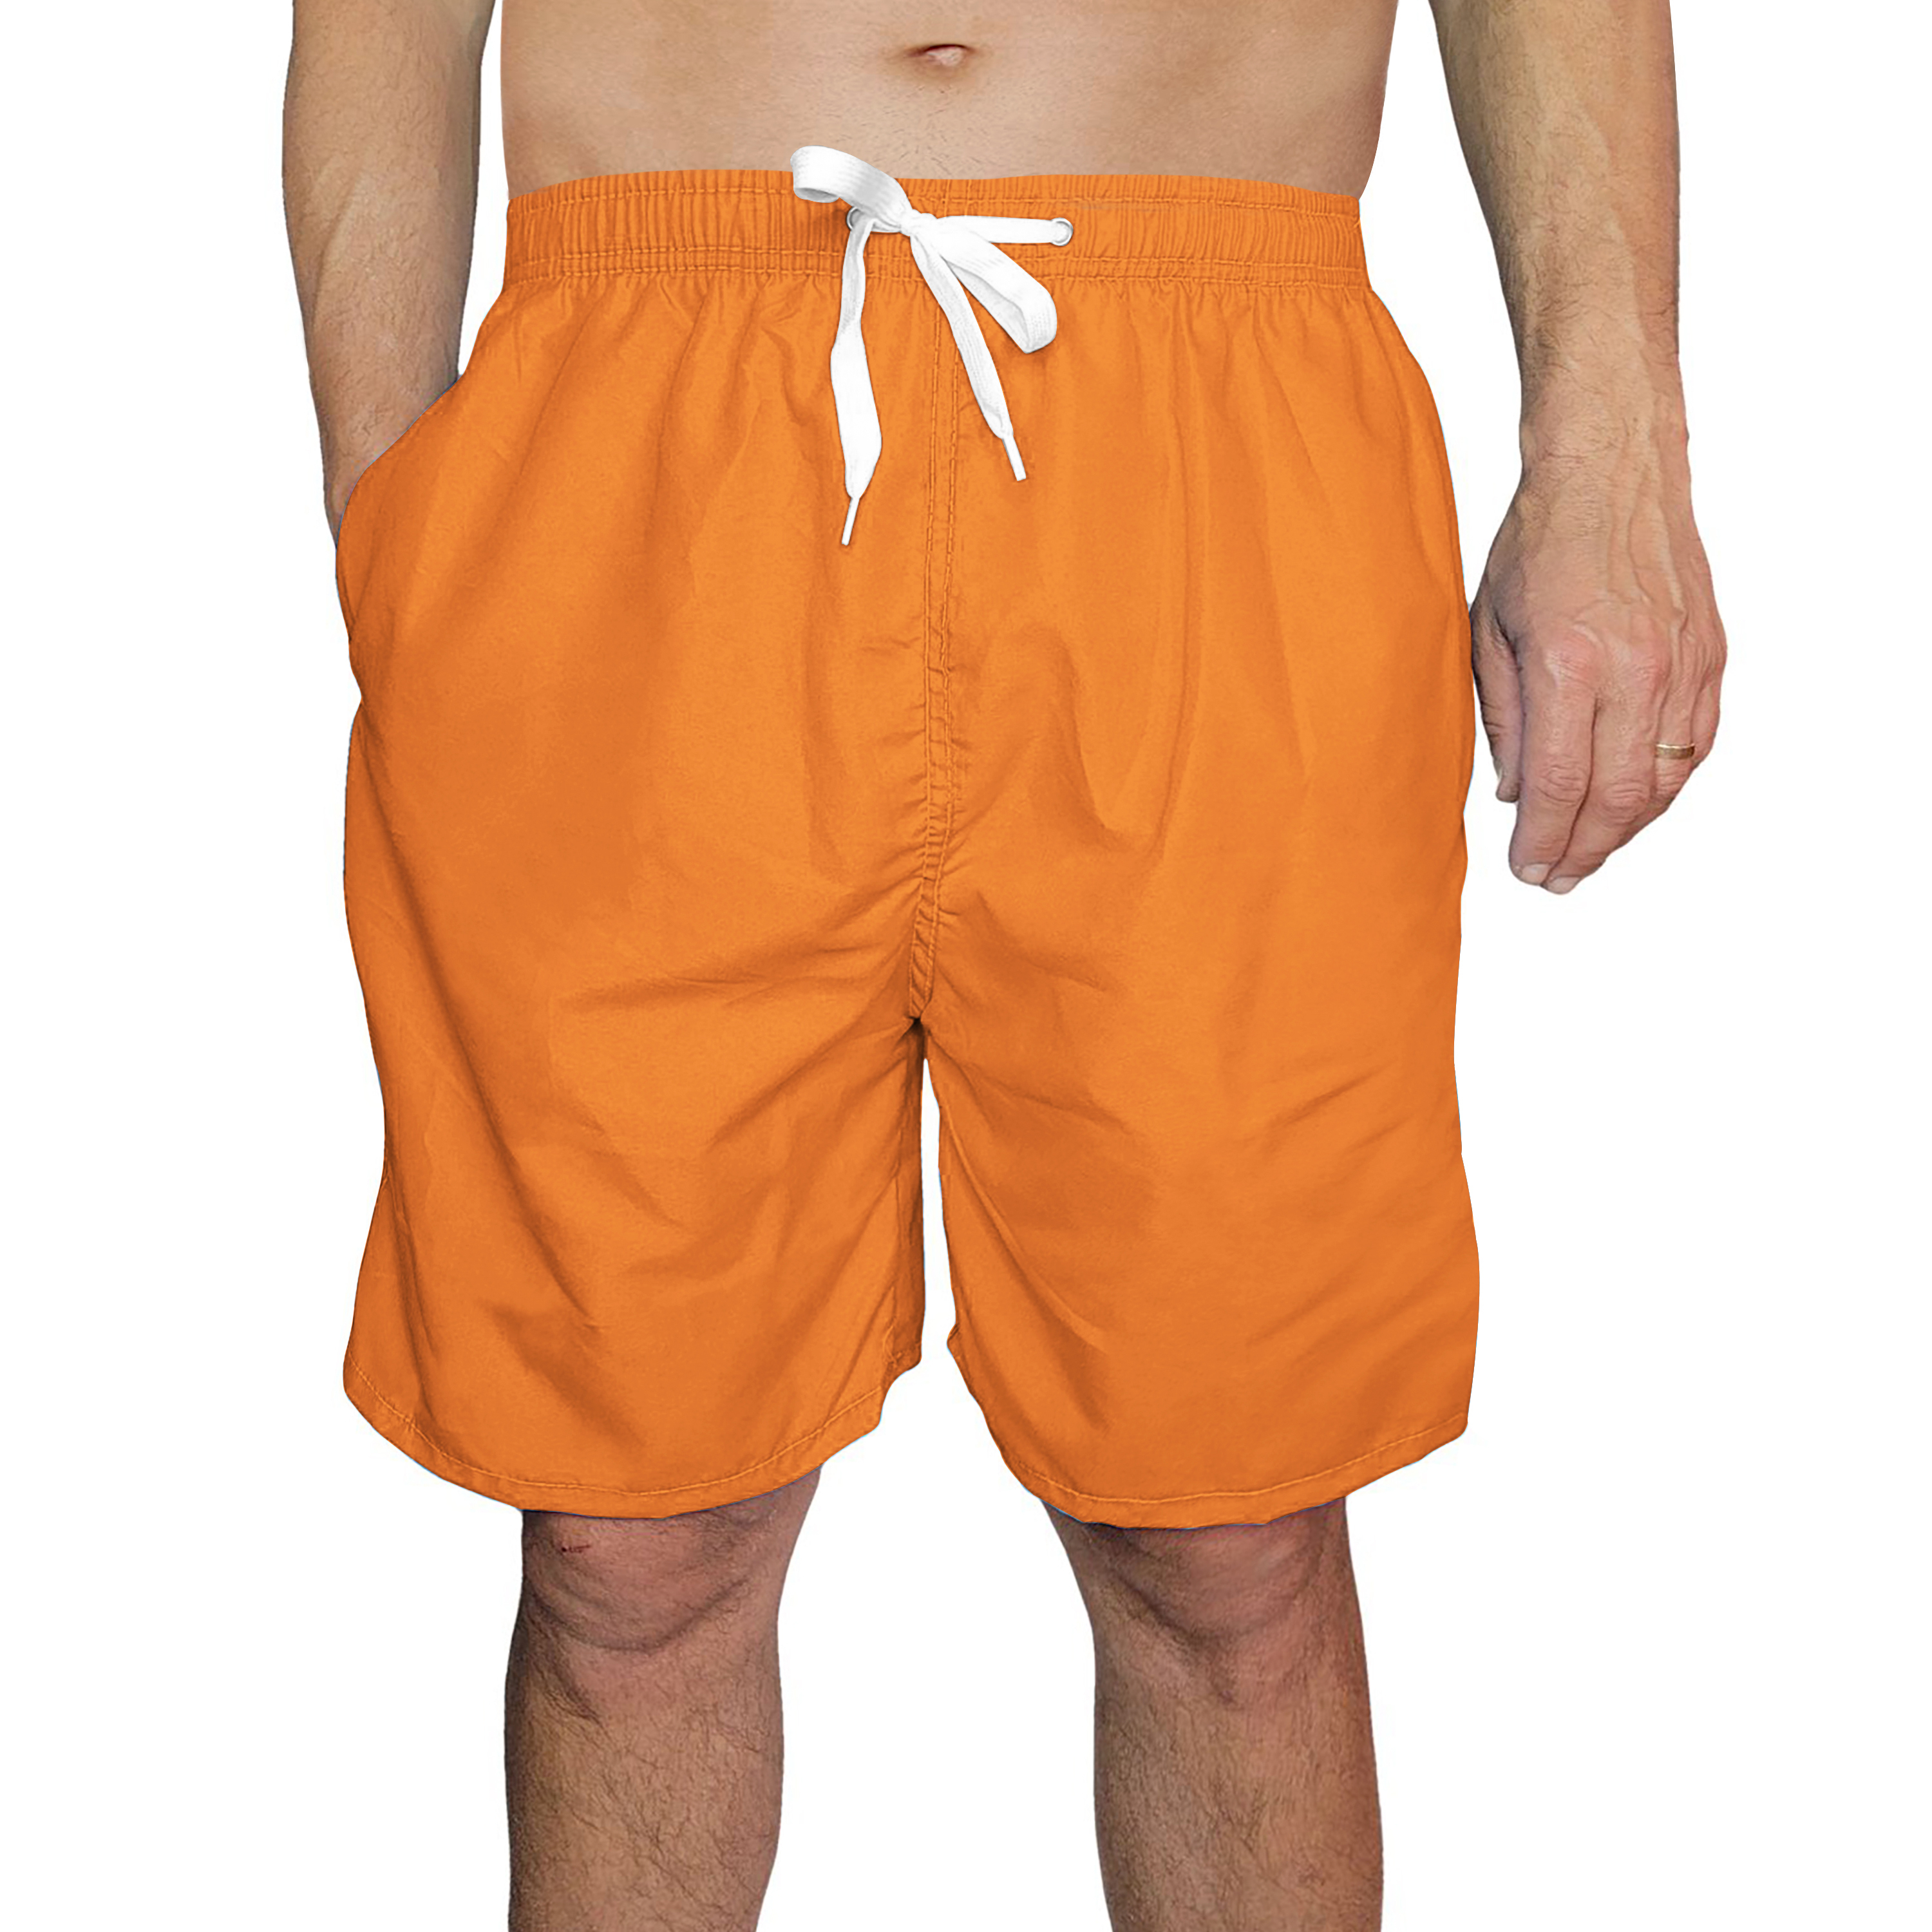 5-Pack Men's Quick Dry Swim Trunks With Pockets Solid Bathing Beachwear Flex Board Shorts - M